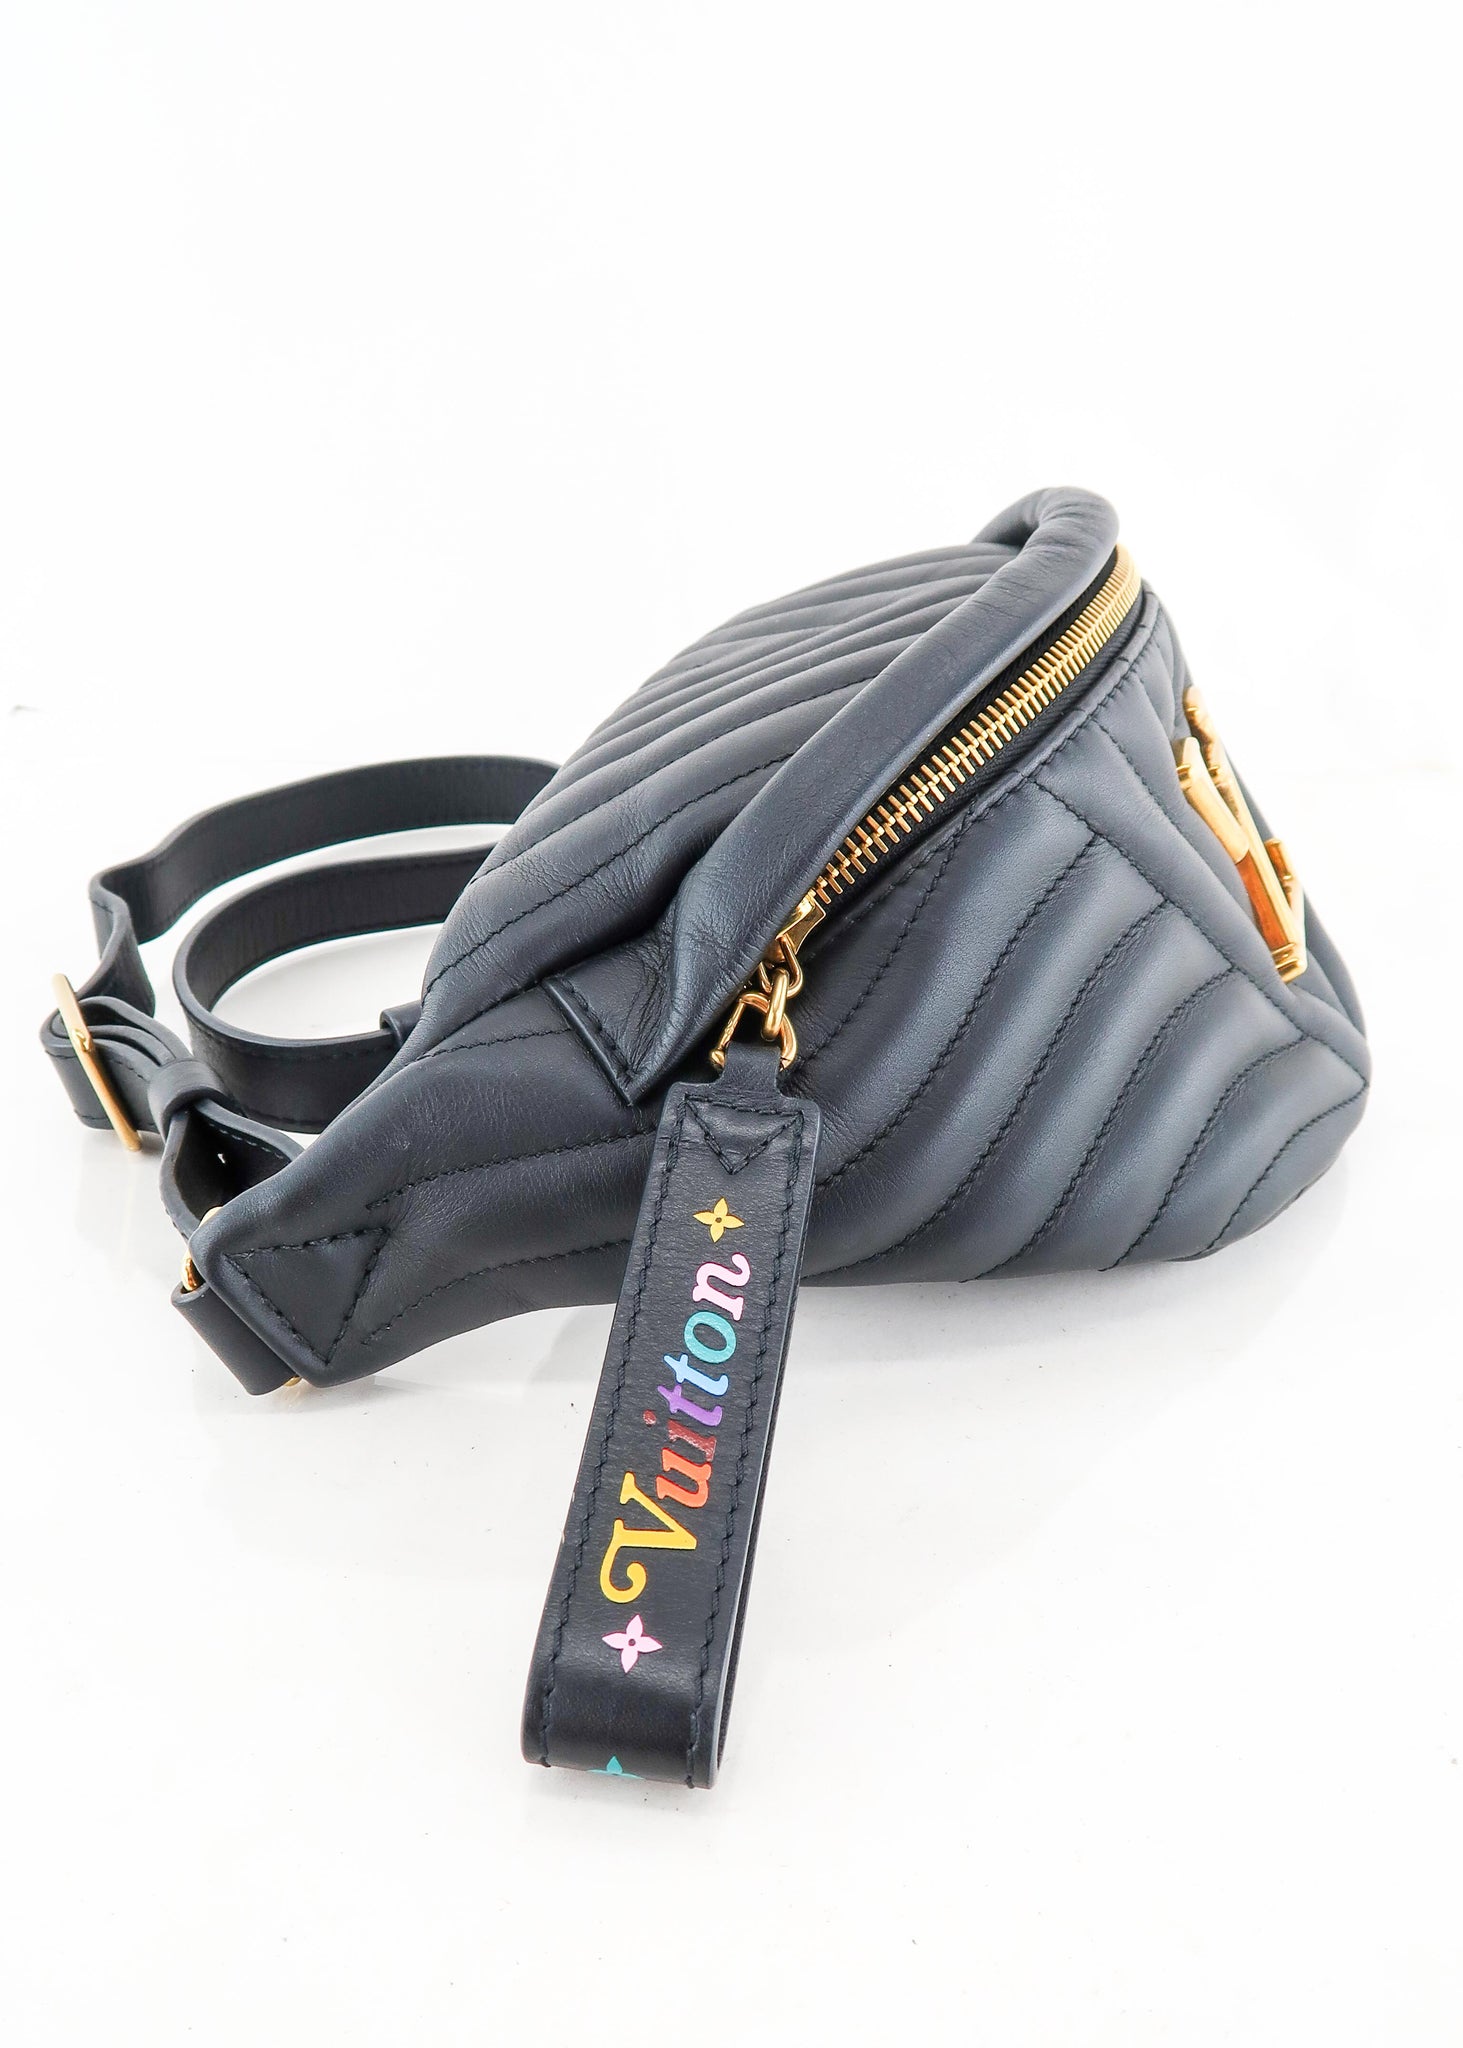 Louis Vuitton lv new wave belt bag bumbag black